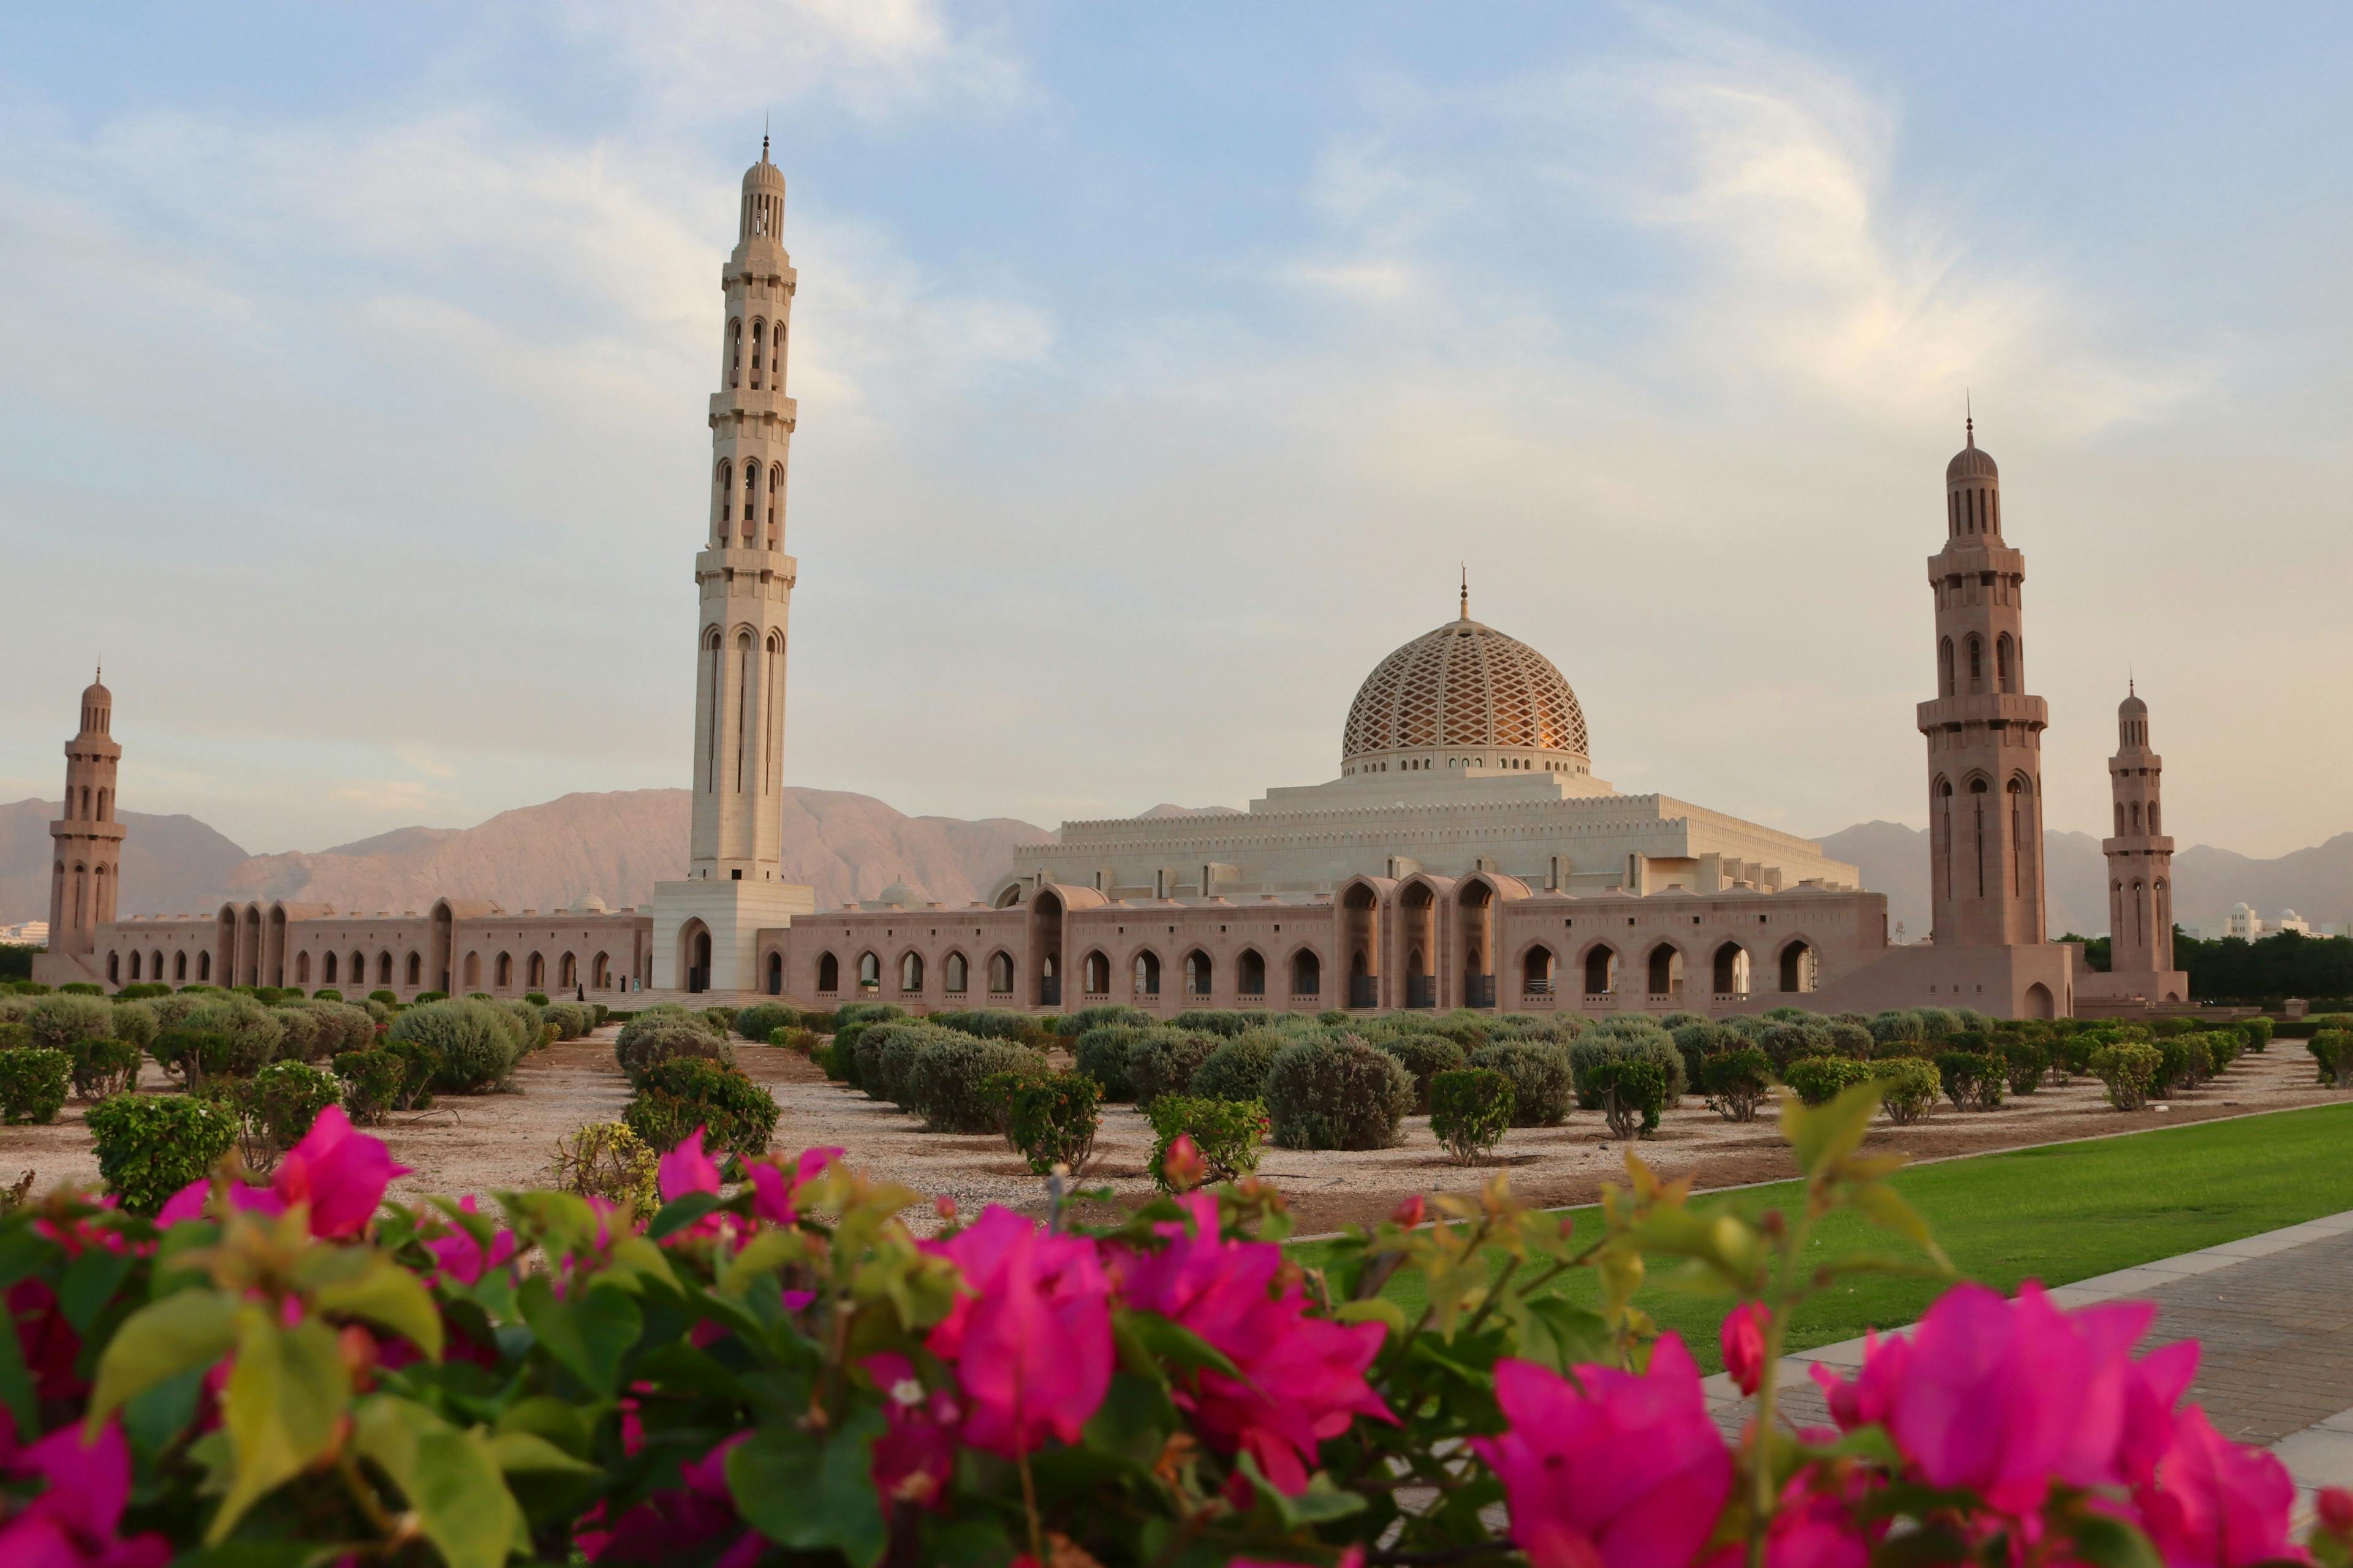 Sultan Qaboos Grand Mosque in Muscat Oman.